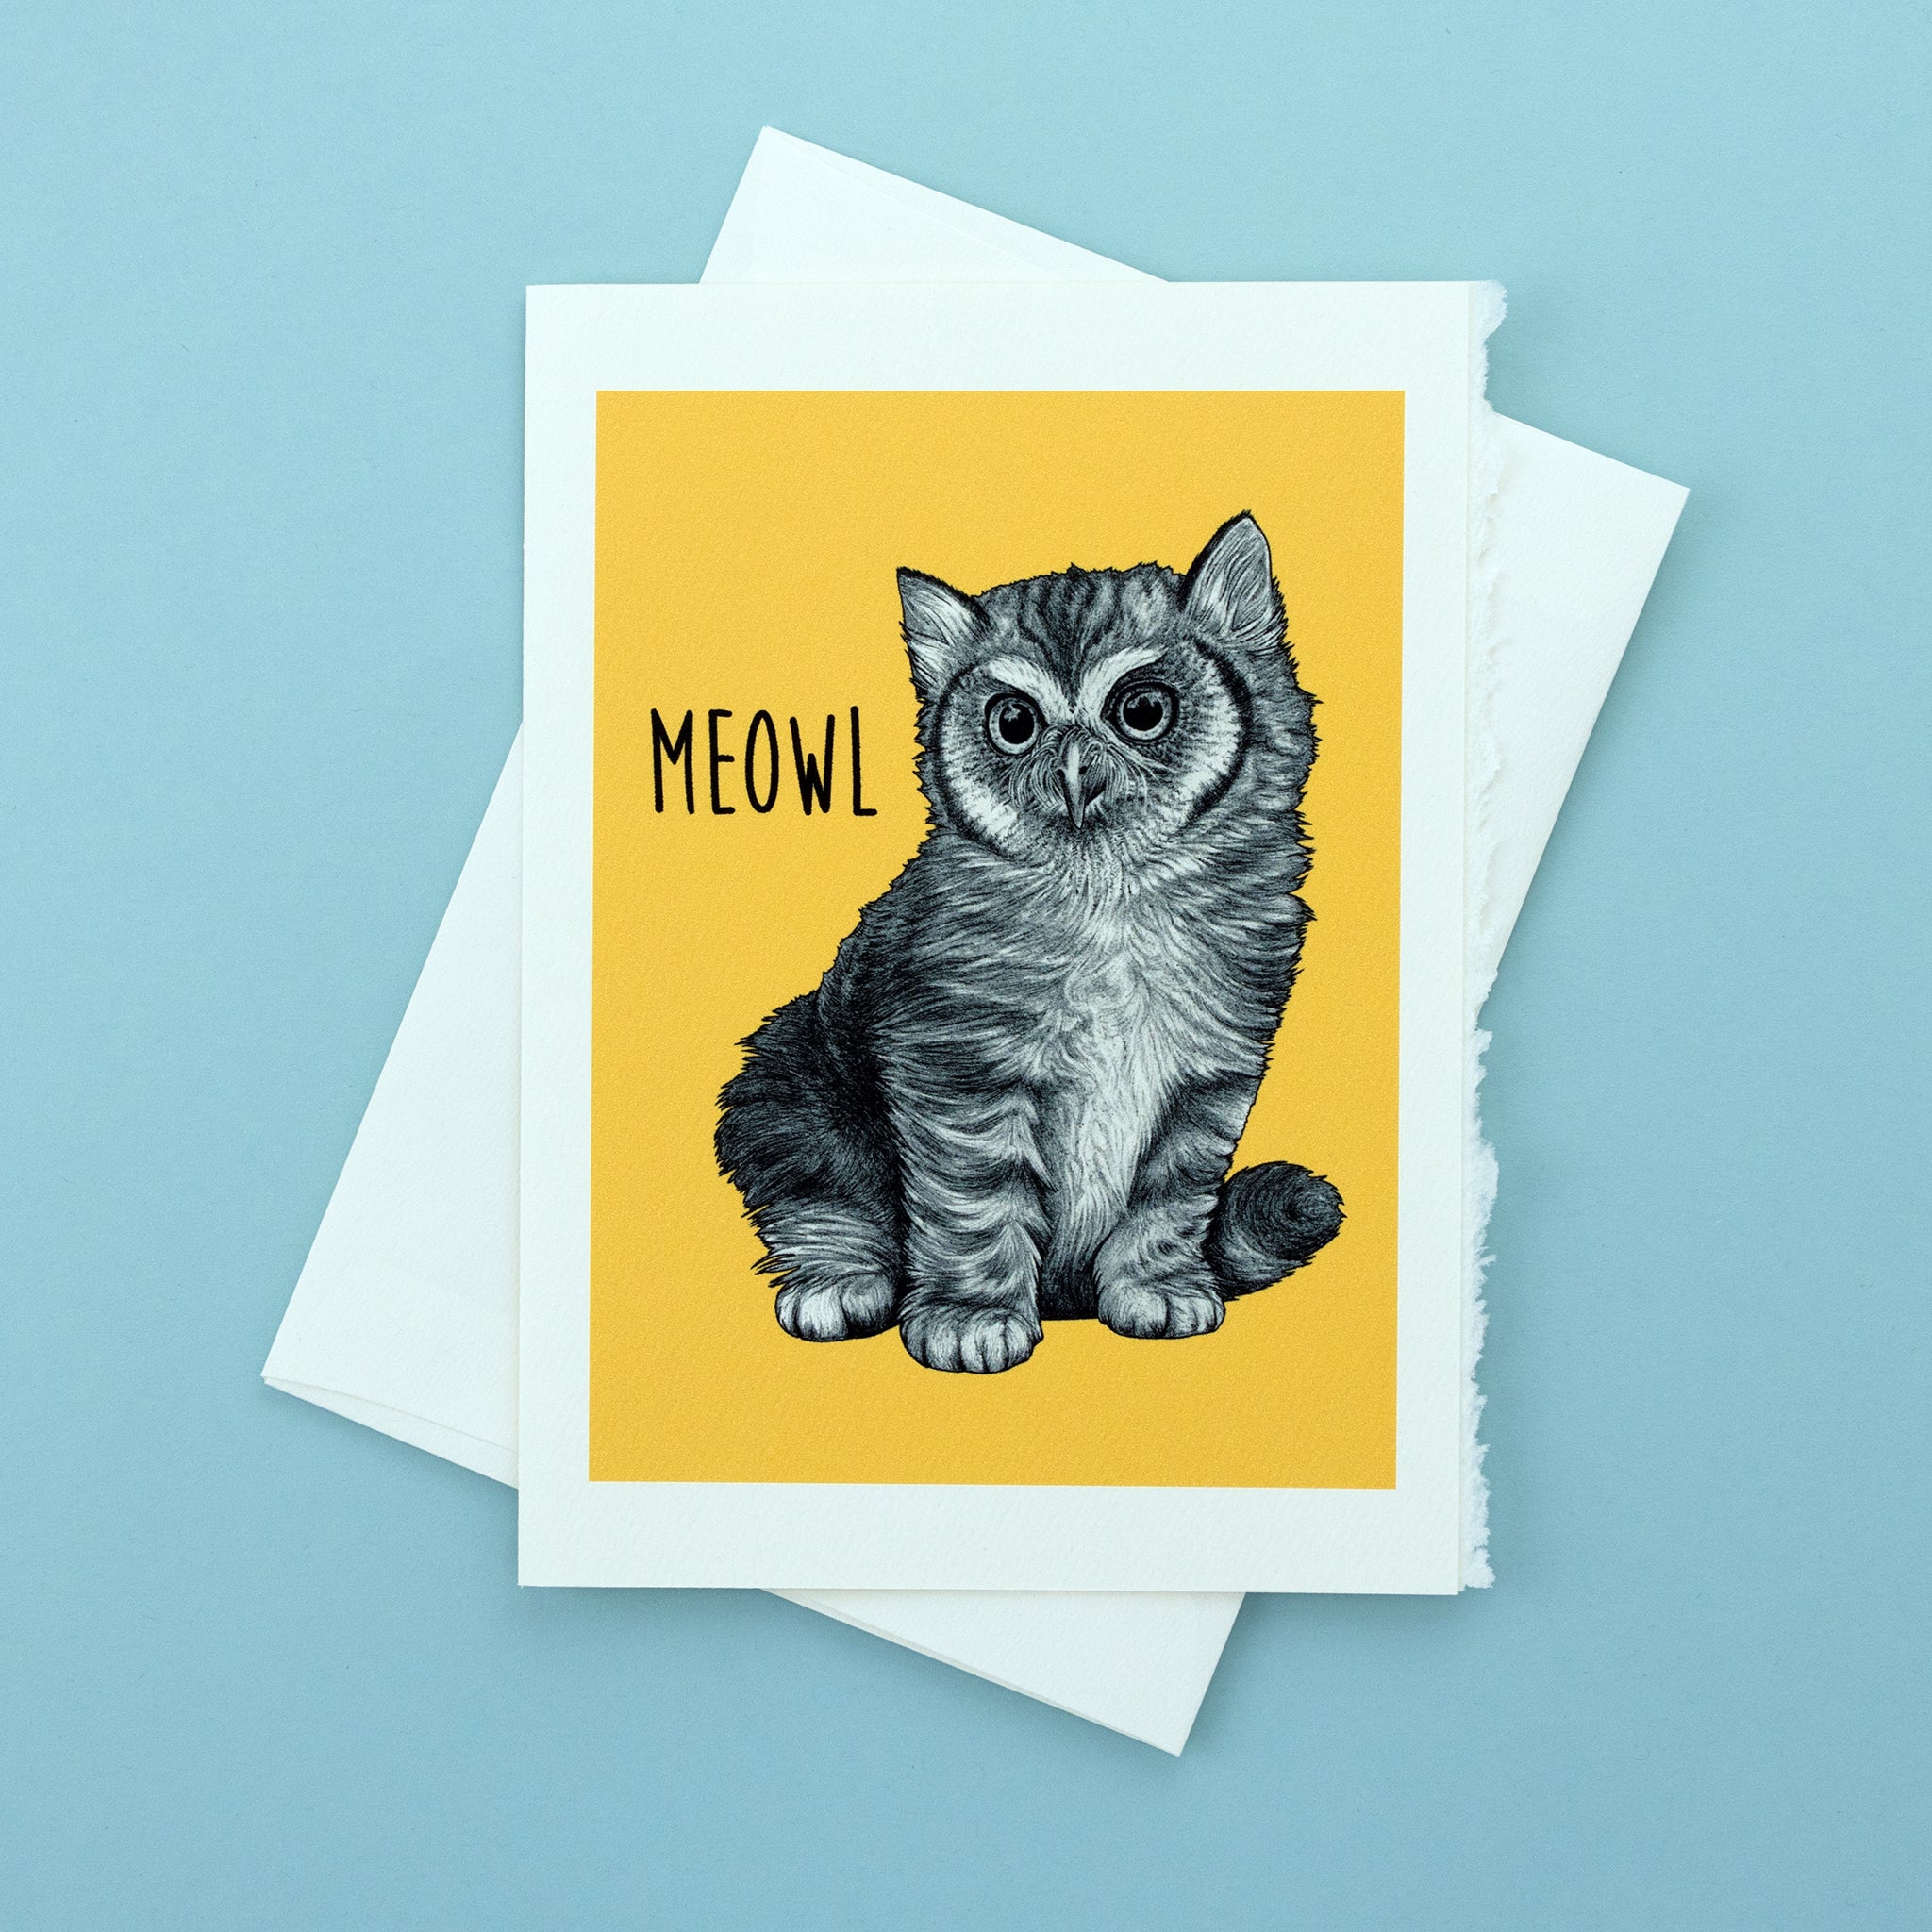 Meowl 5x7" Greeting Card